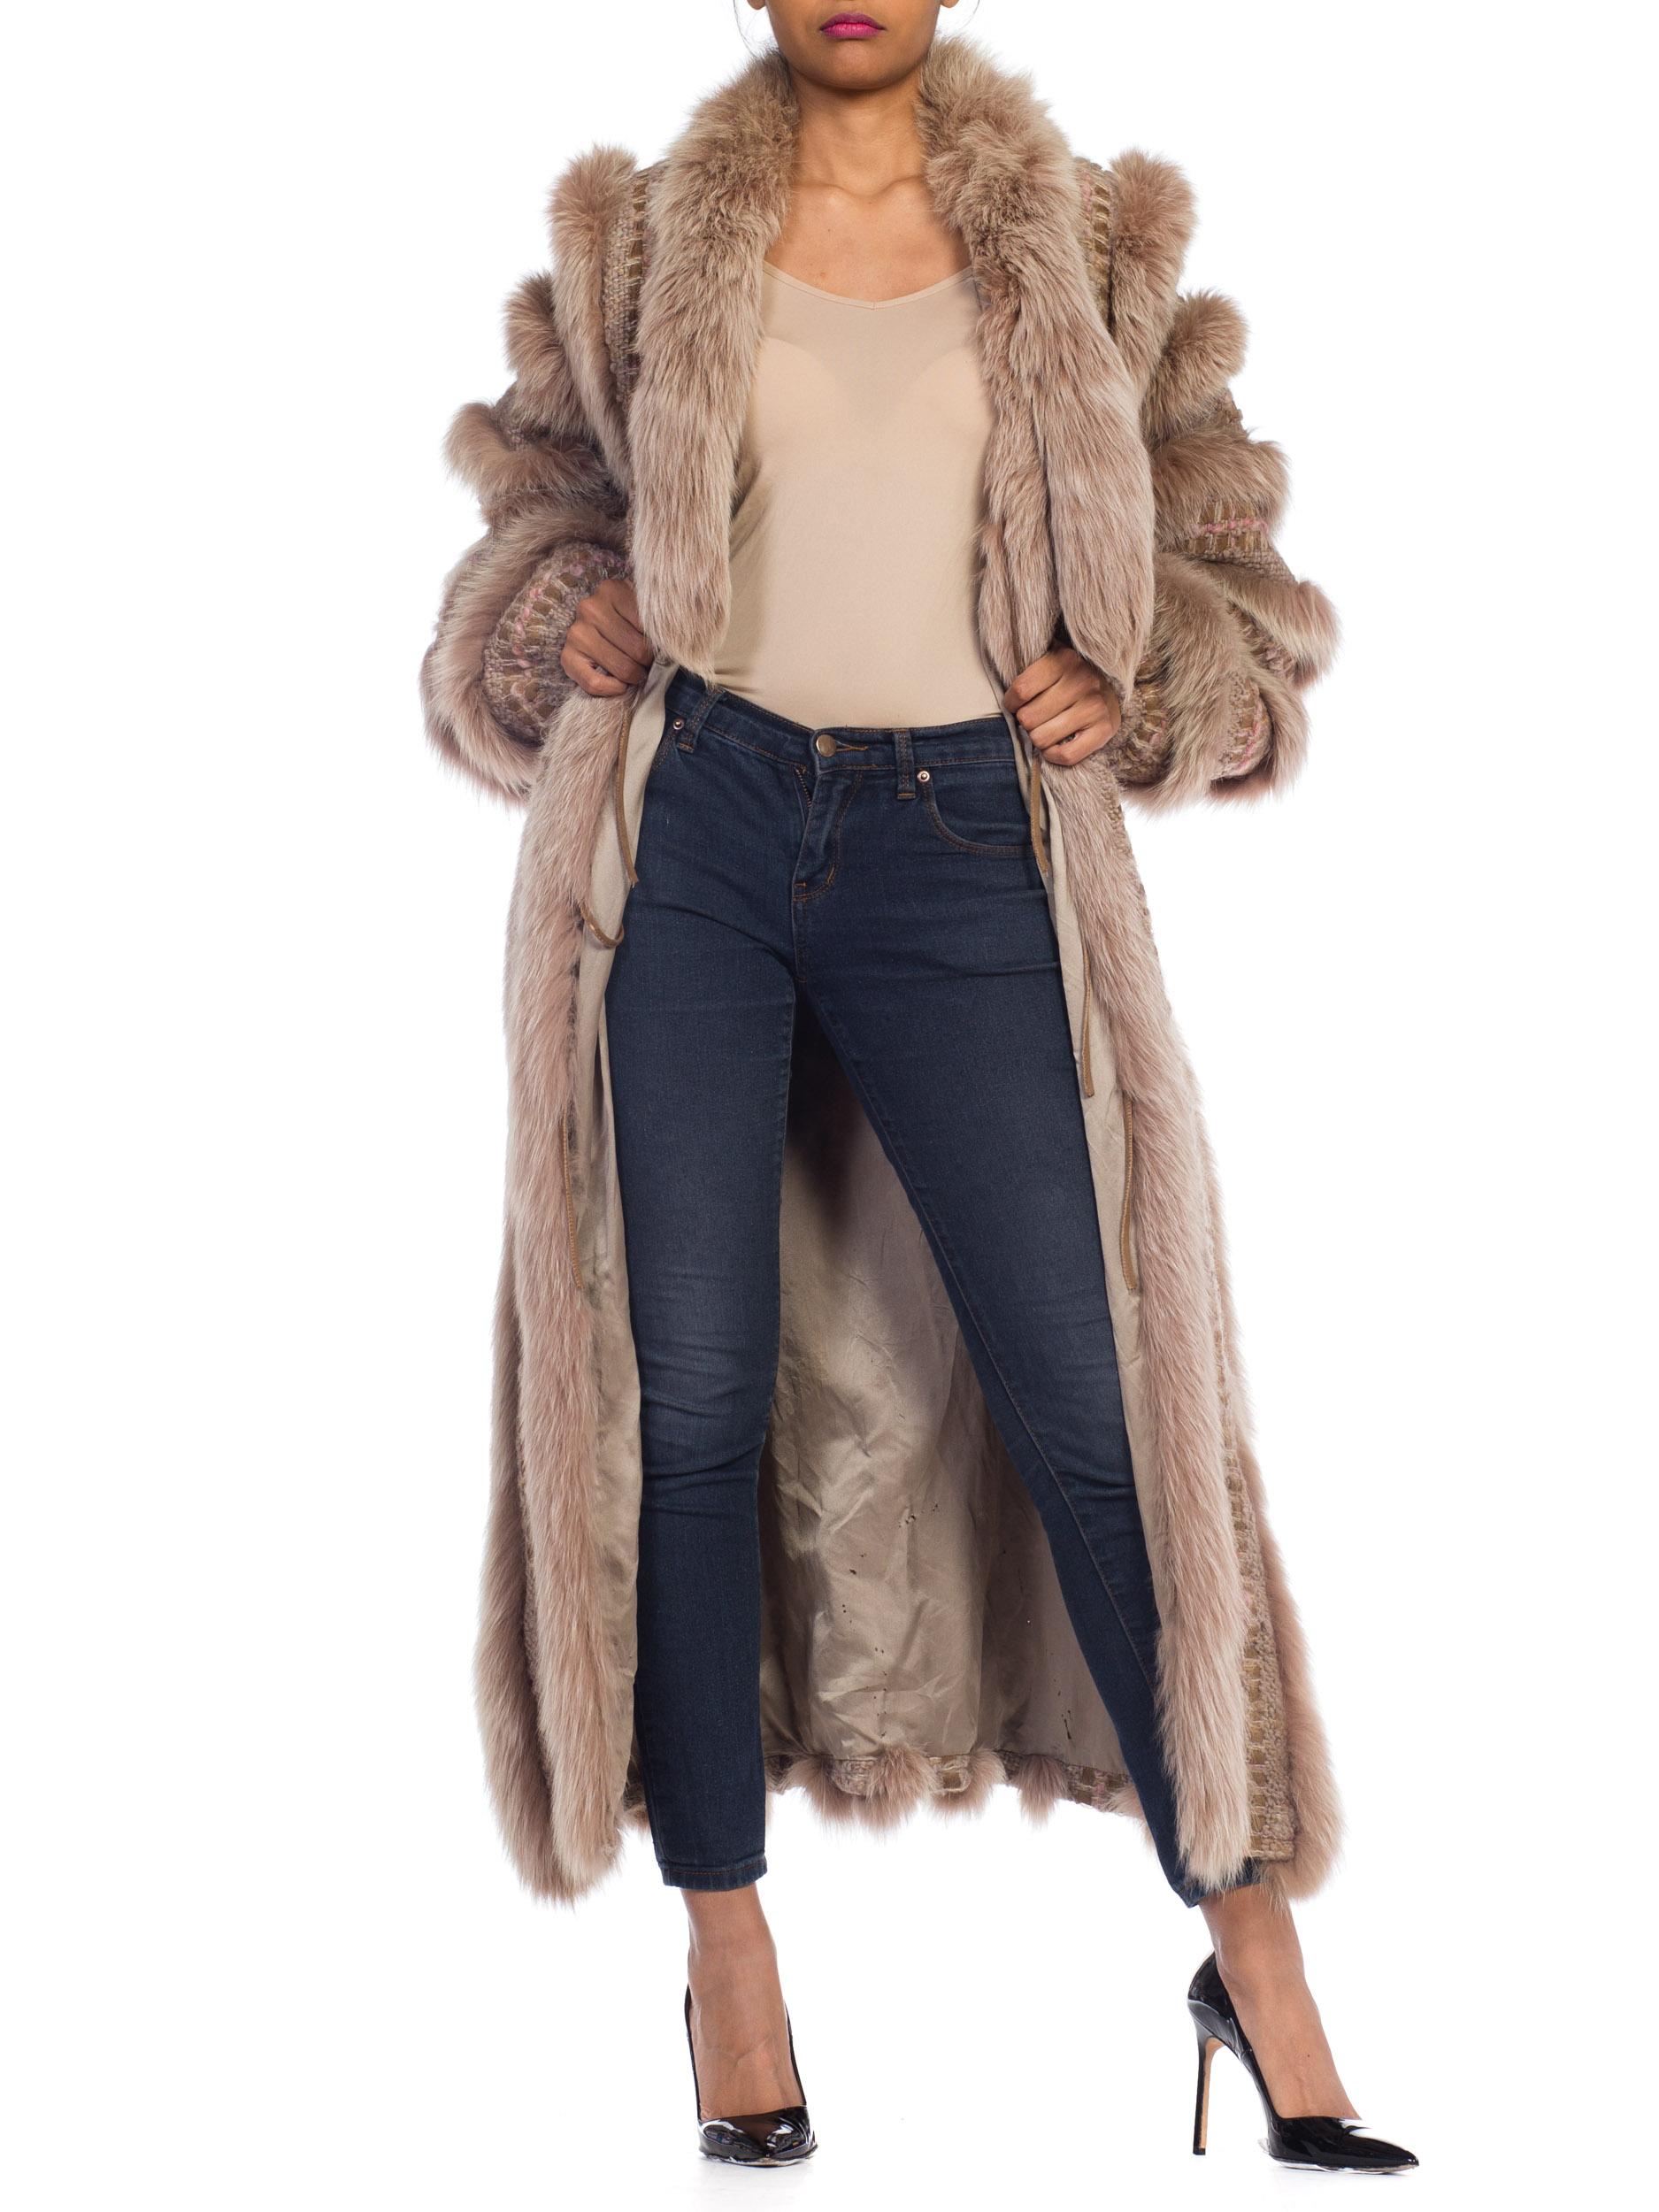 Wild Oversized Fox Fur & Knit Coat 7